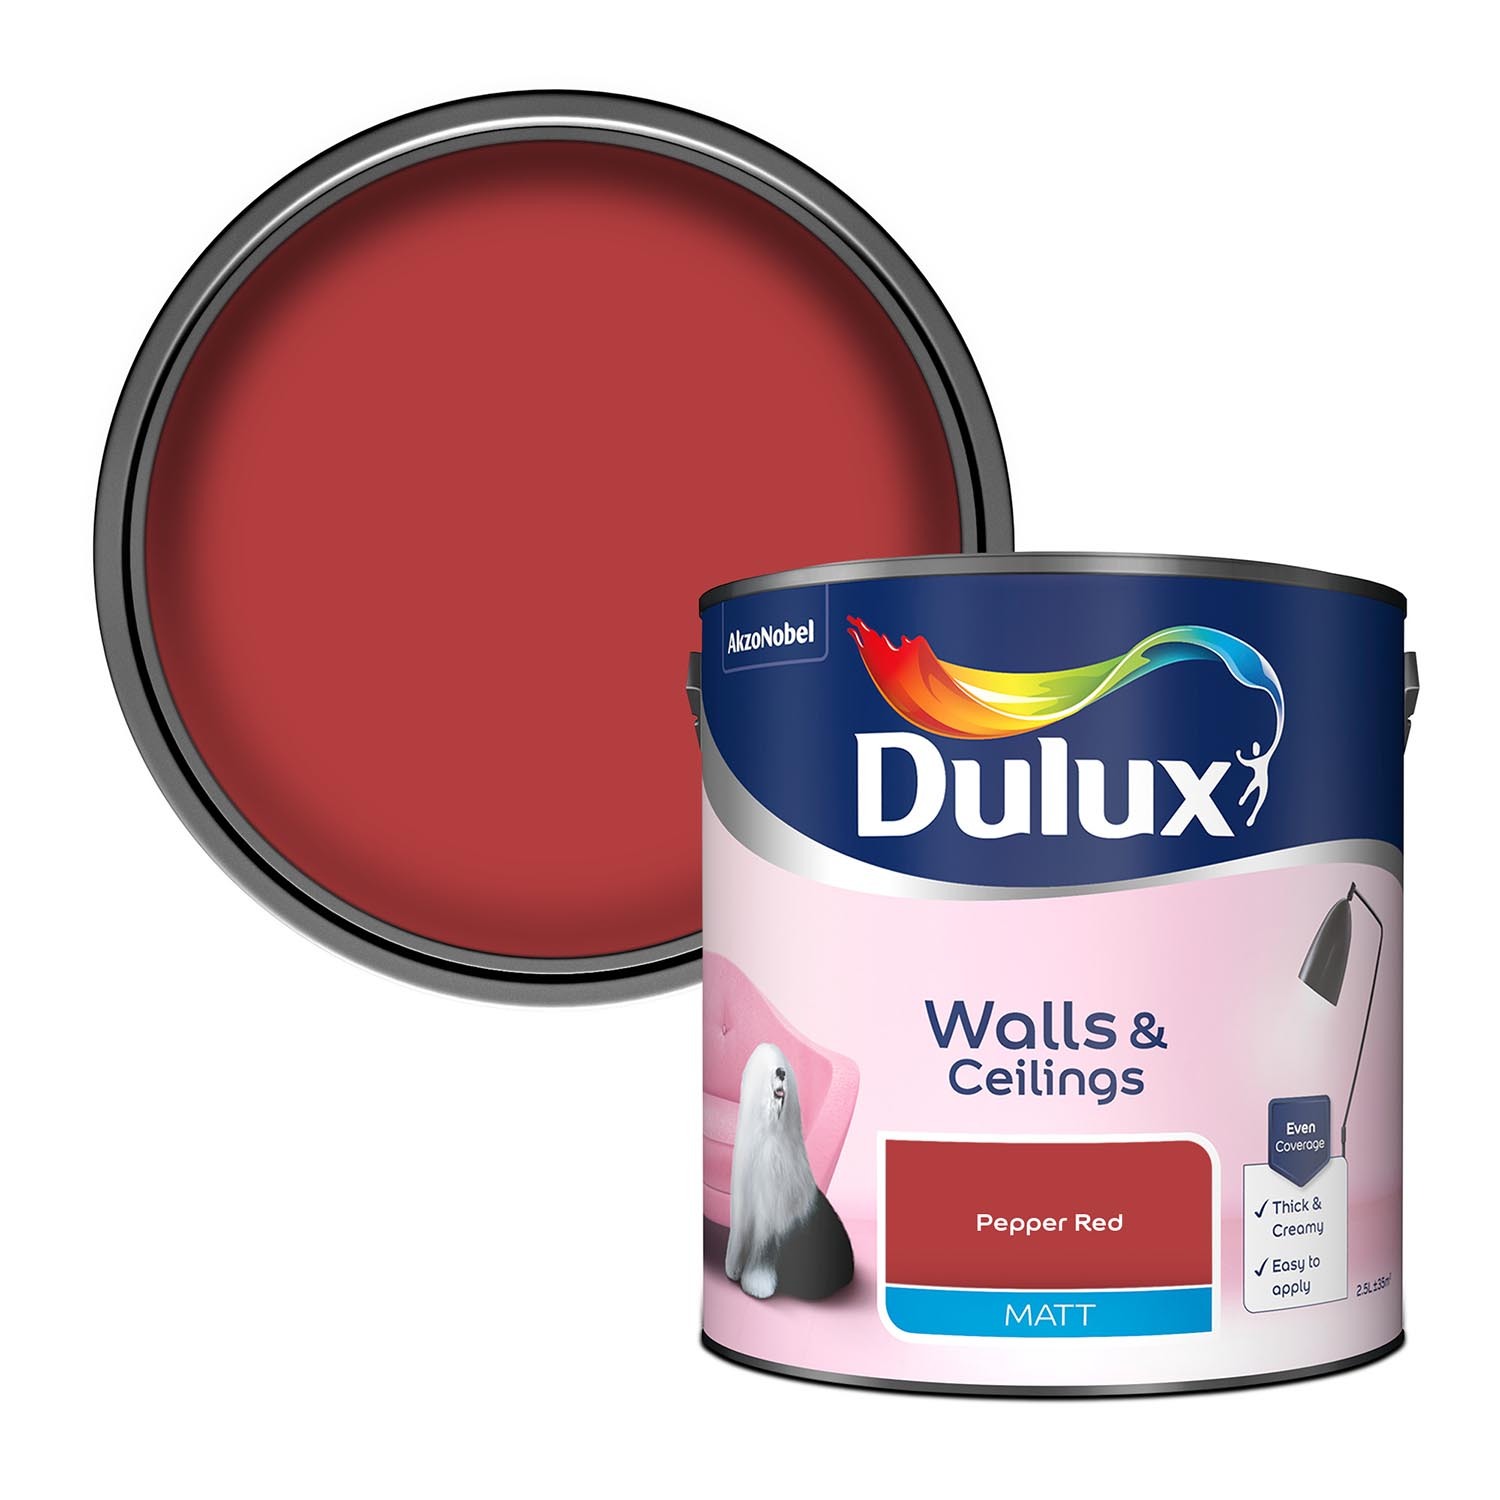 Dulux Walls & Ceilings Pepper Red Matt Emulsion Paint 2.5L Image 1